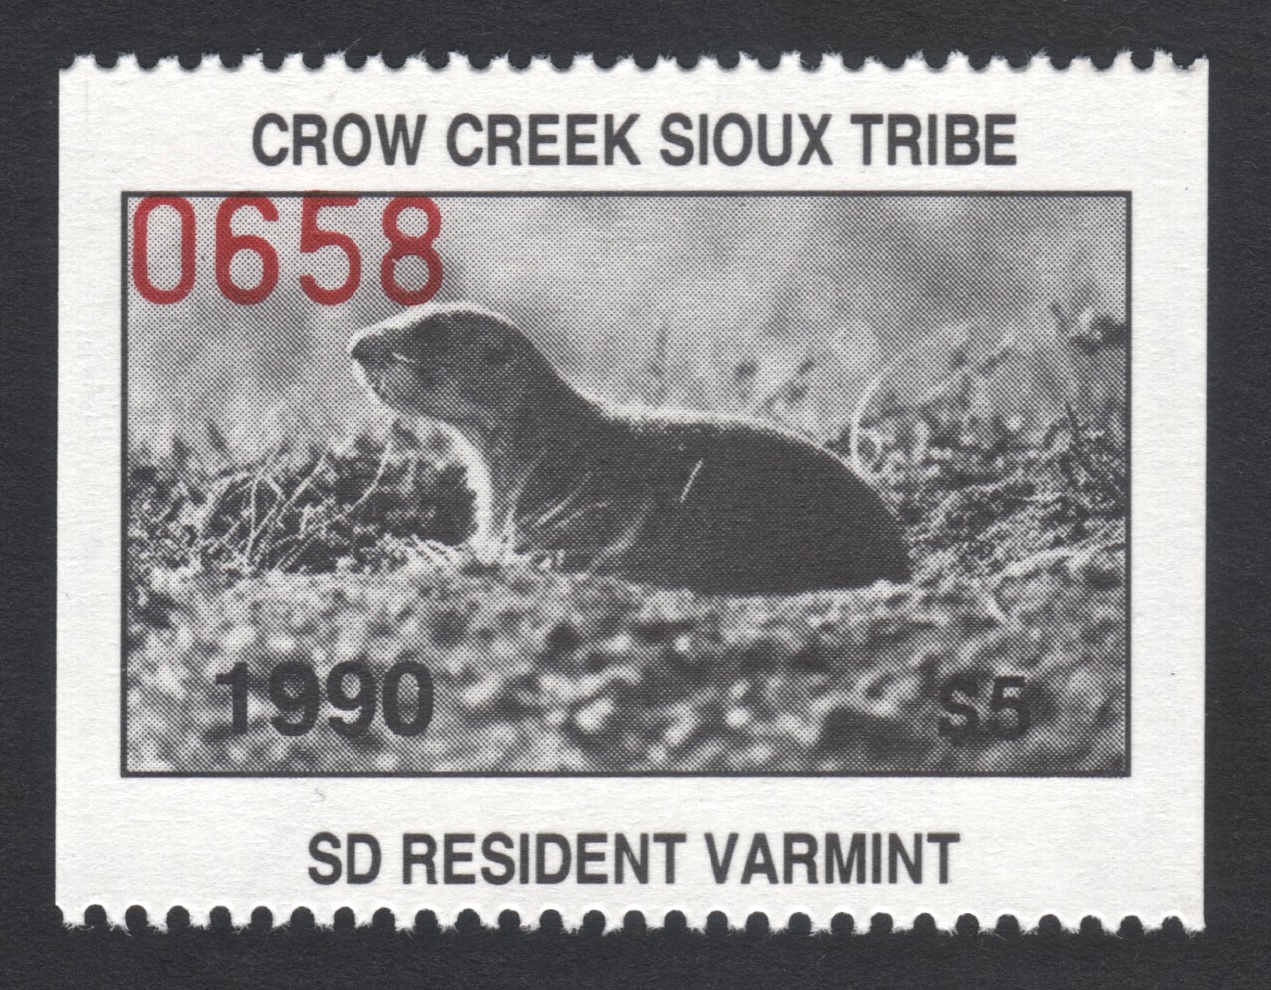 1990 Crow Creek SD Resident Varmint